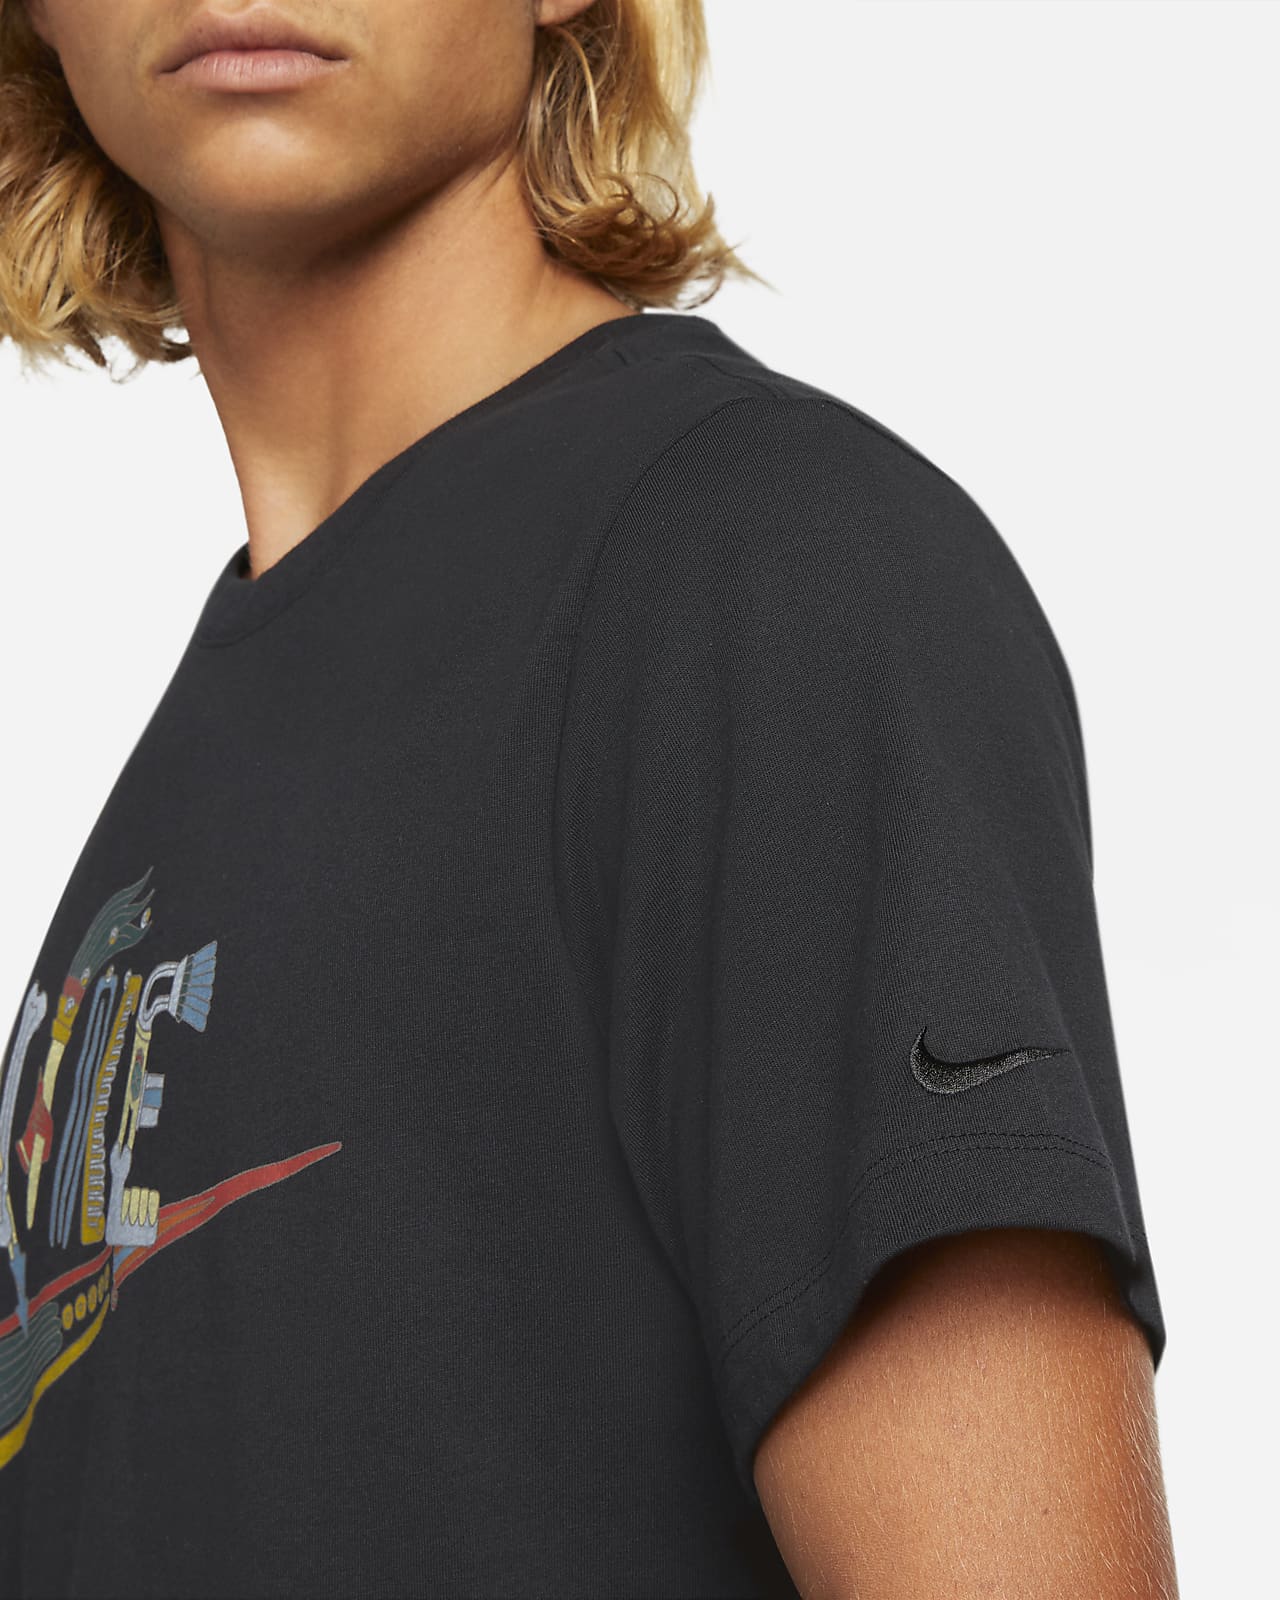 Nike TShirts - Buy Nike T-shirts Online in India